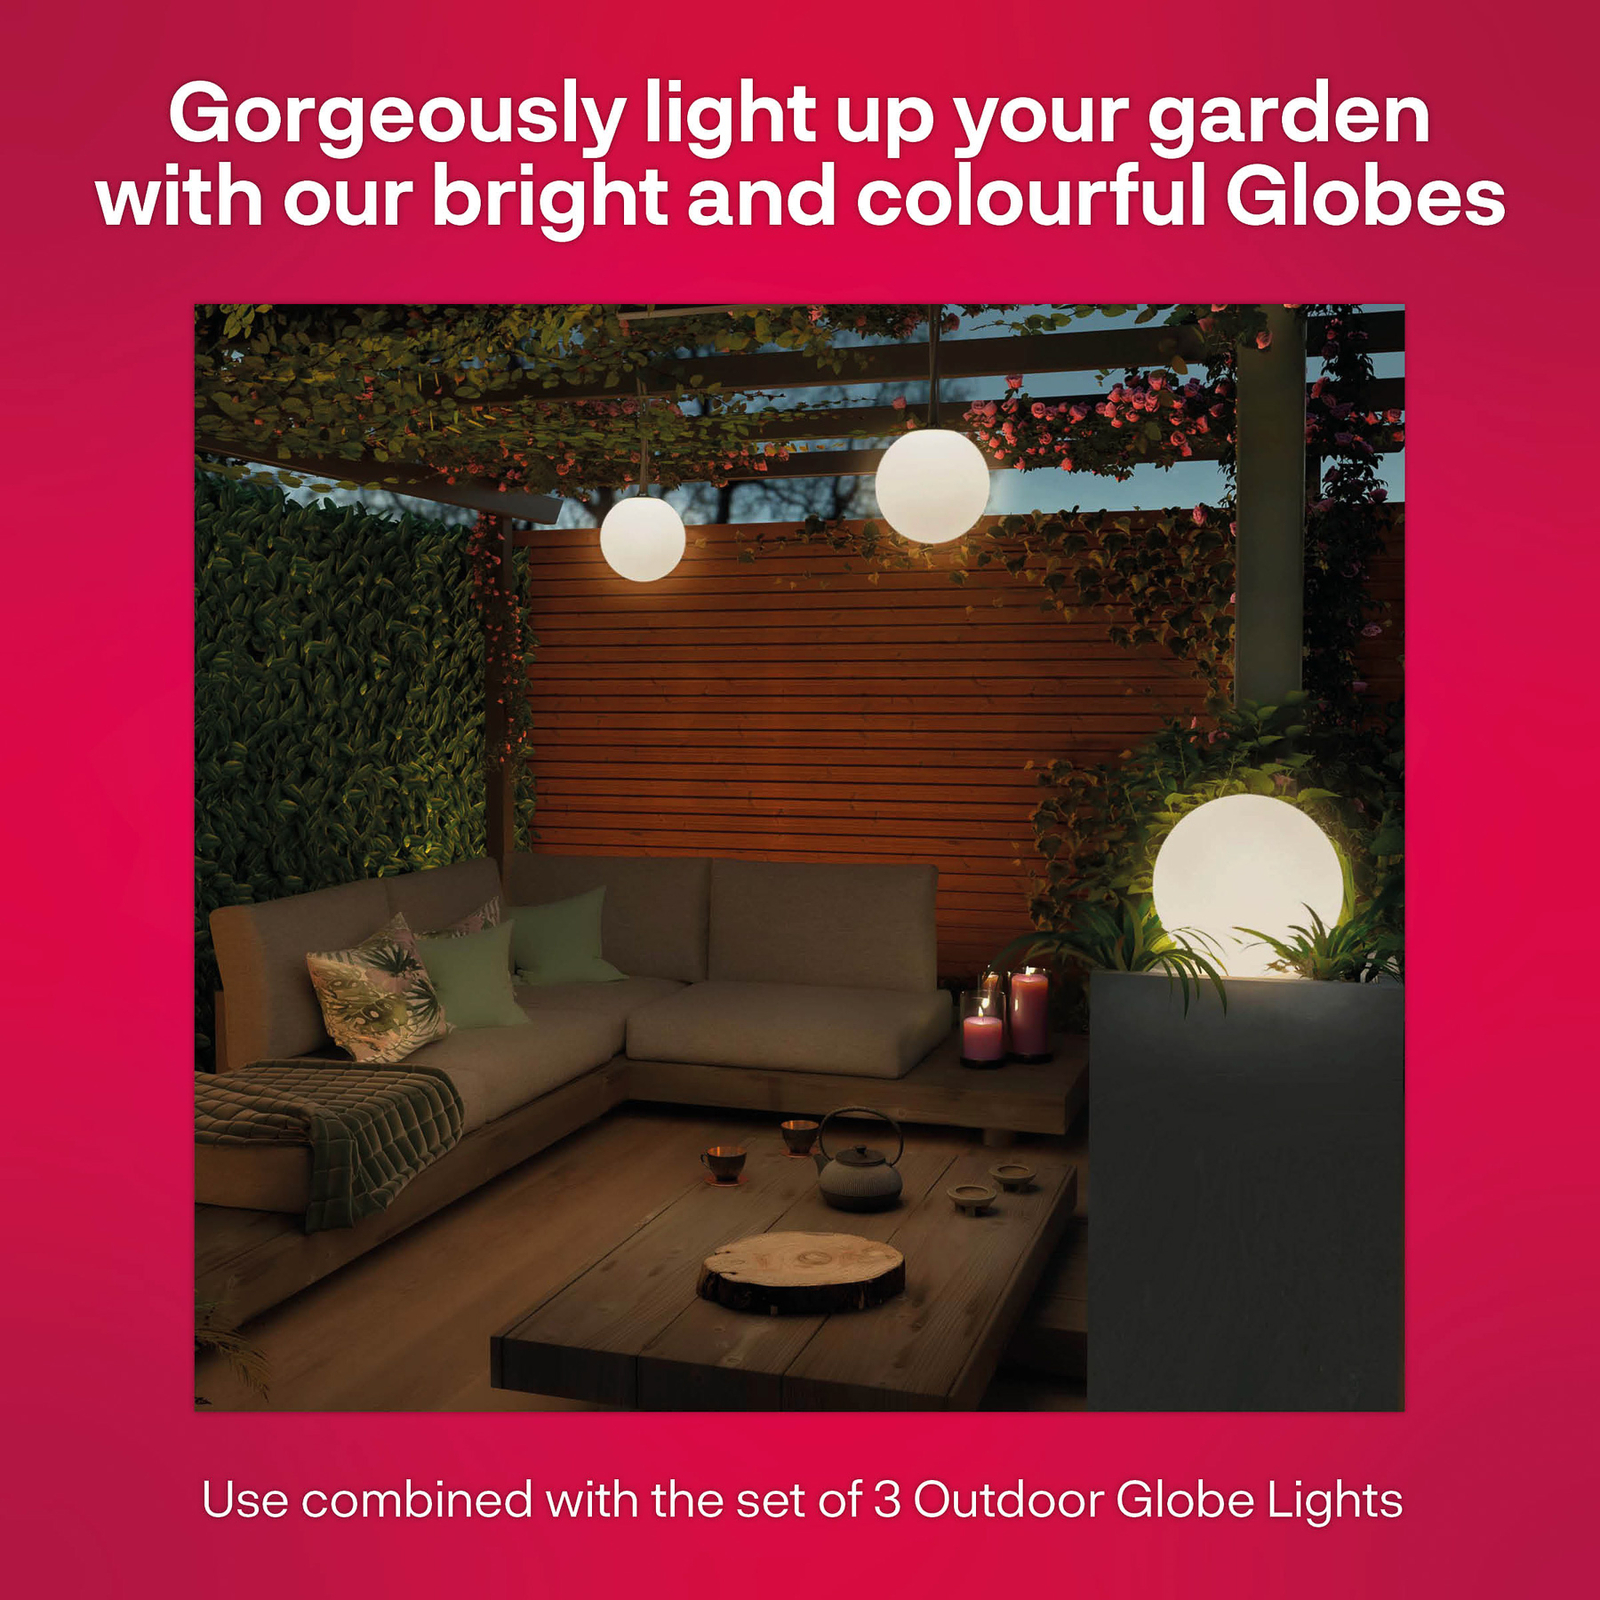 Innr Smart Outdoor Globe Colour sphère LED, ajout